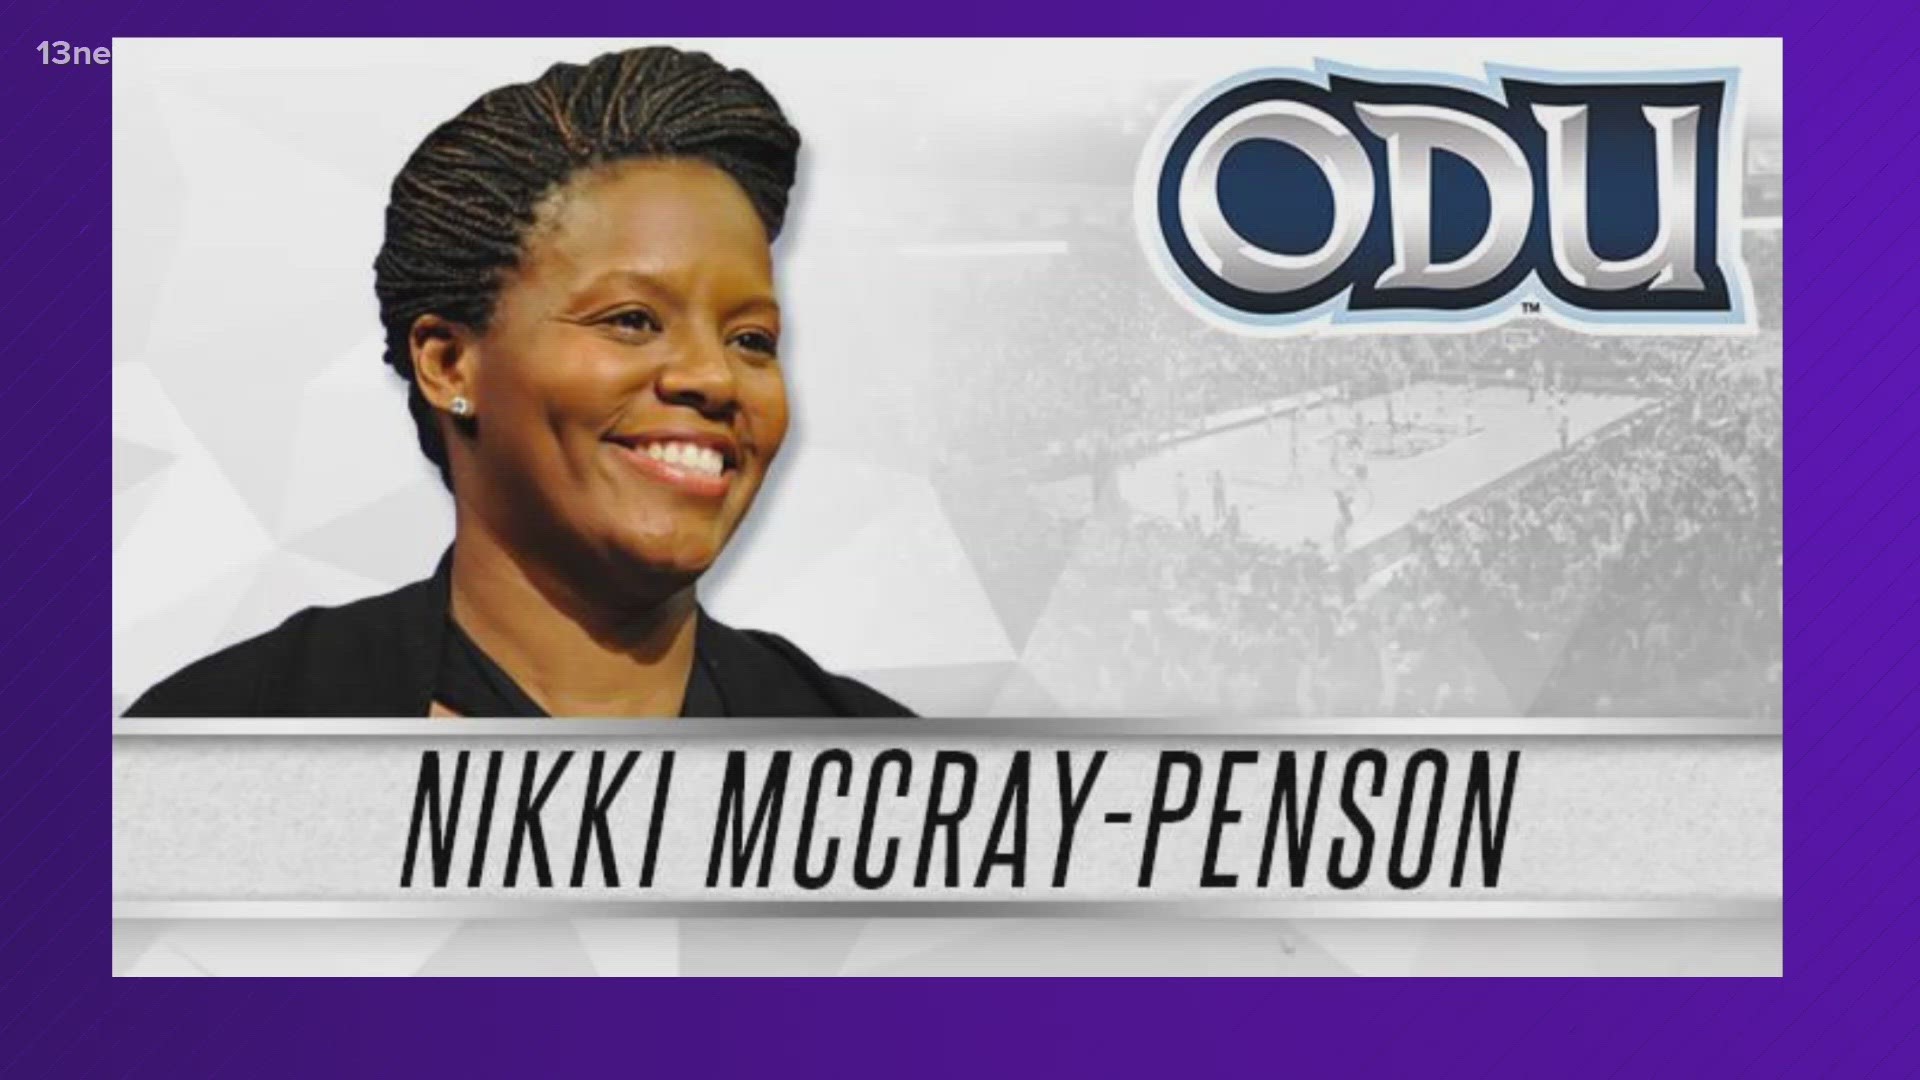 Former ODU Women's Basketball Coach Nikki McCray-Penson Dies at 51